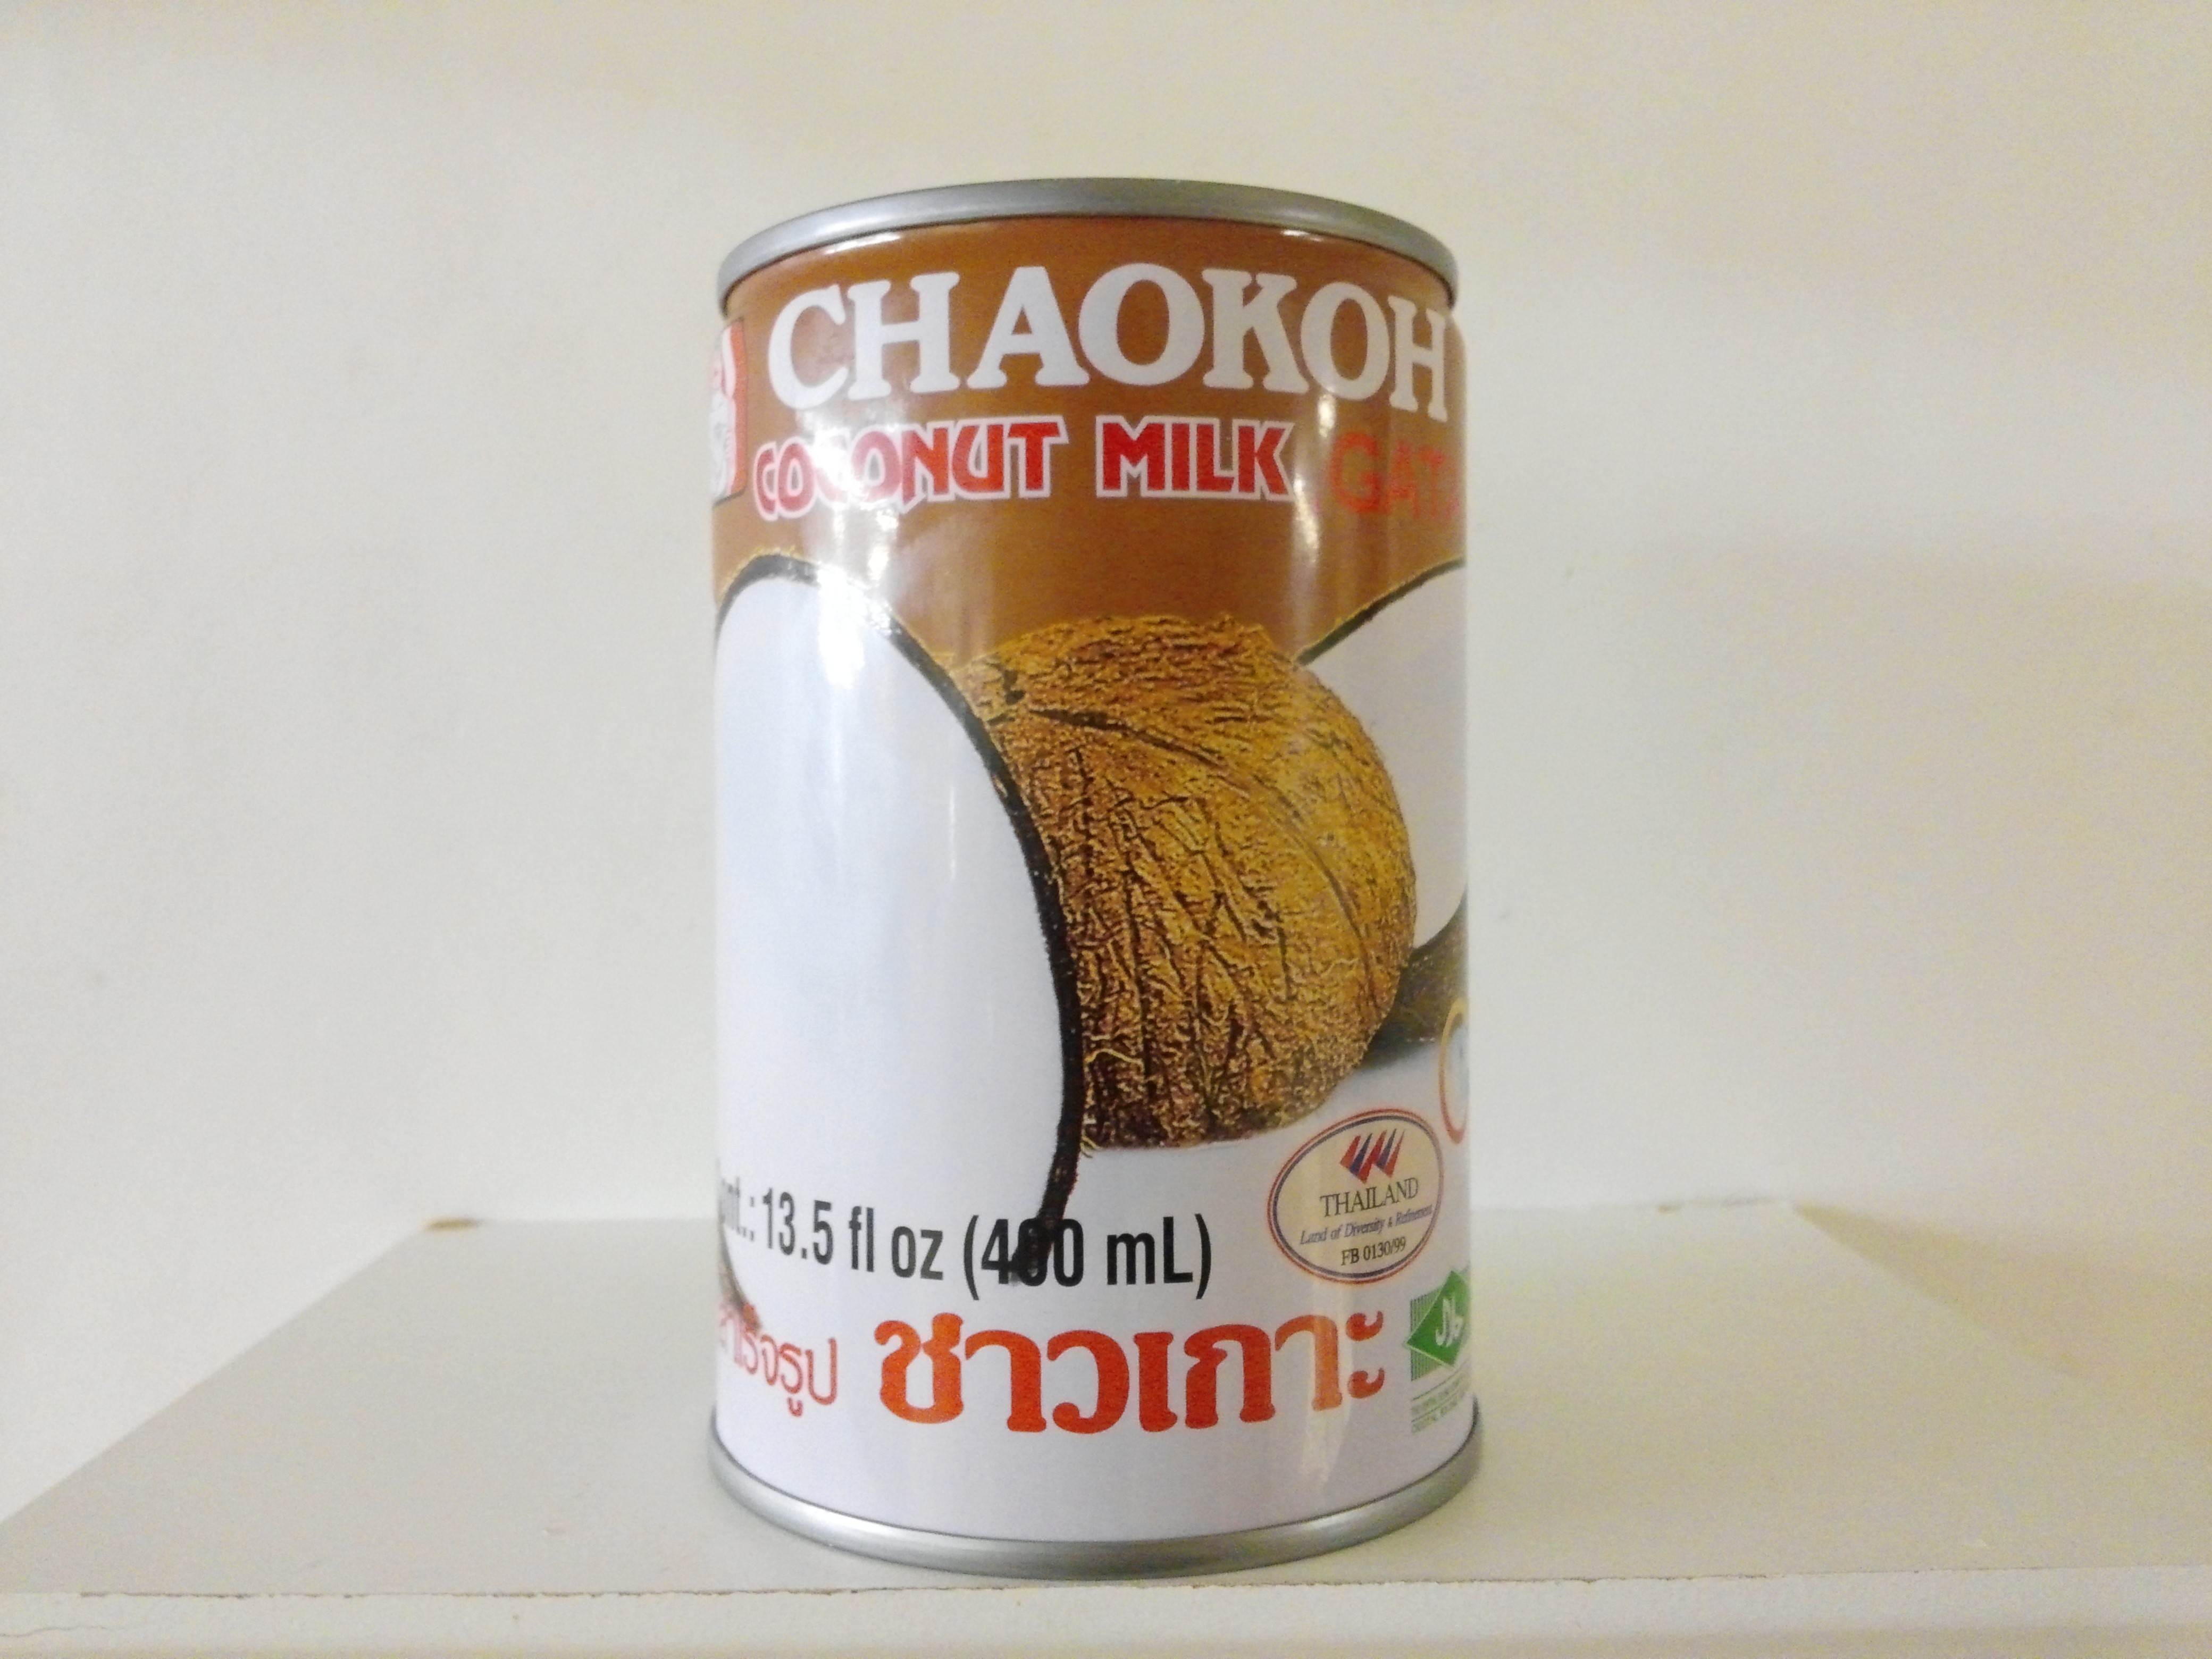 Chaokoh Coconut Milk 13.5 oz